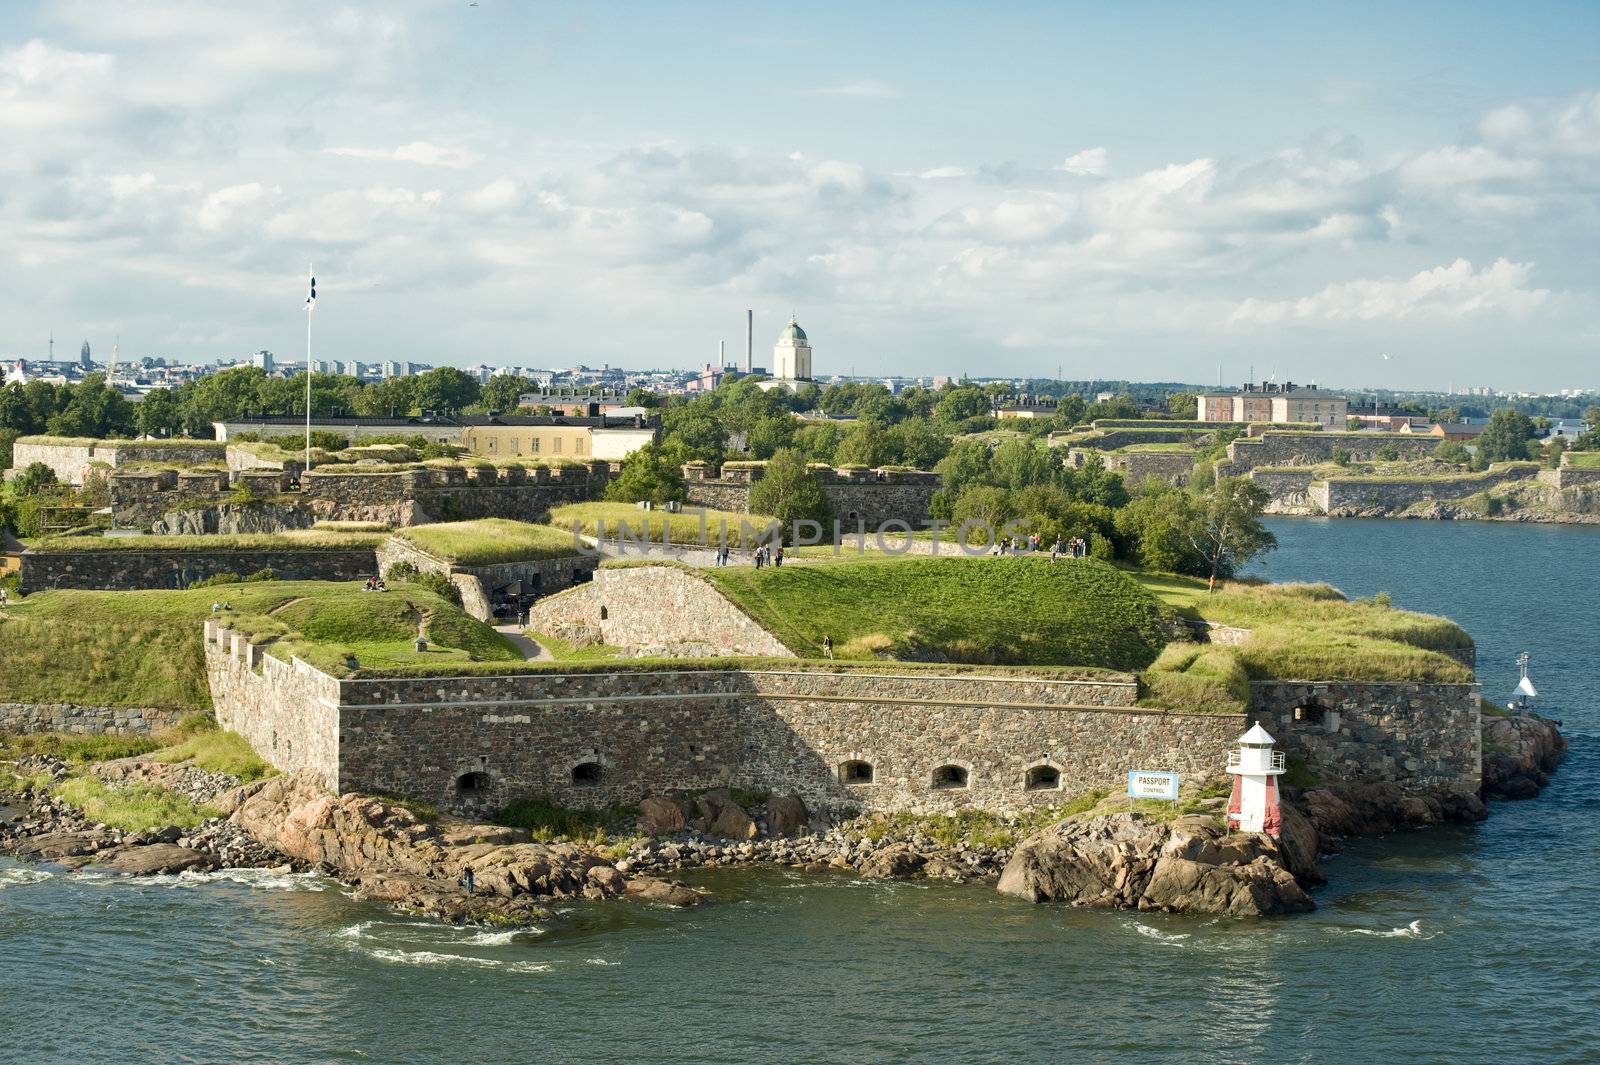 Sveaborg (Suomenlinna) fortress near Helsinki, Finland